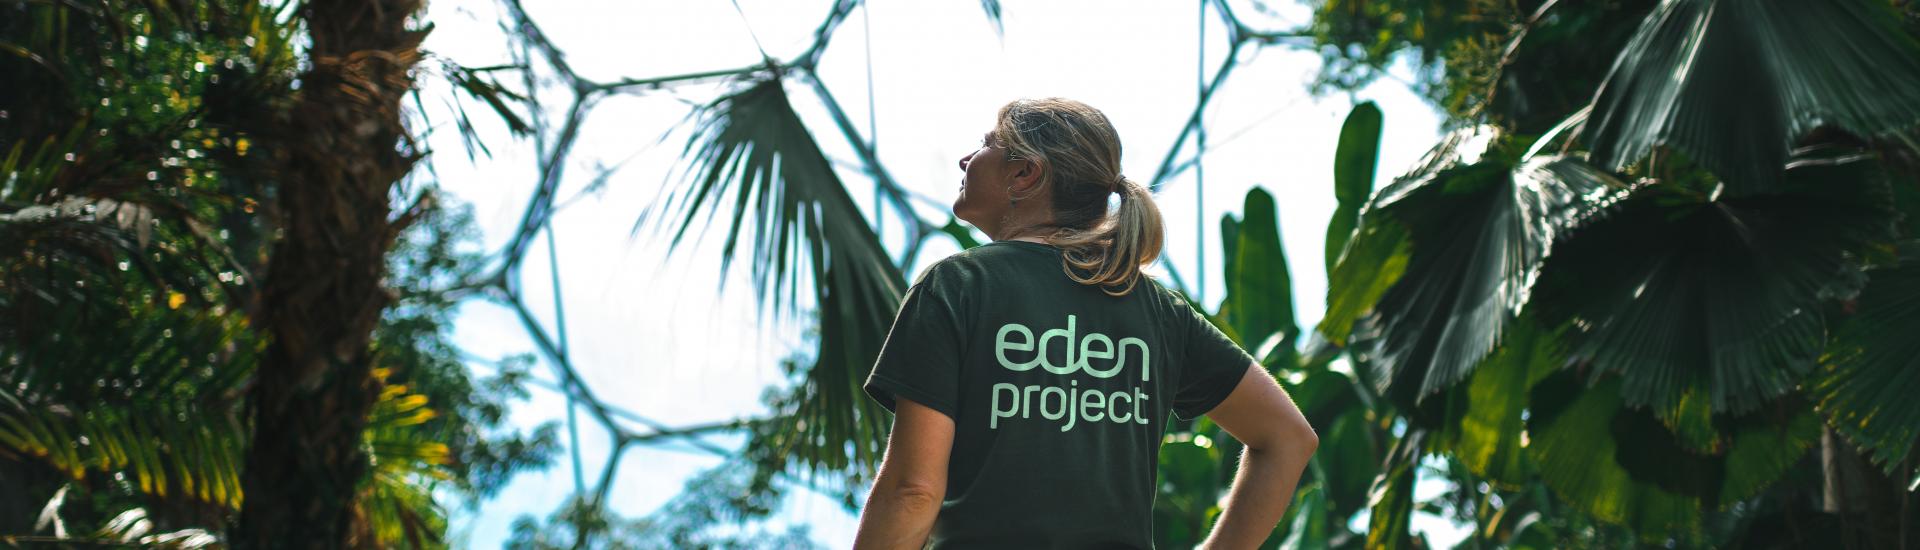 Eden Project team member in Rainforest Biome